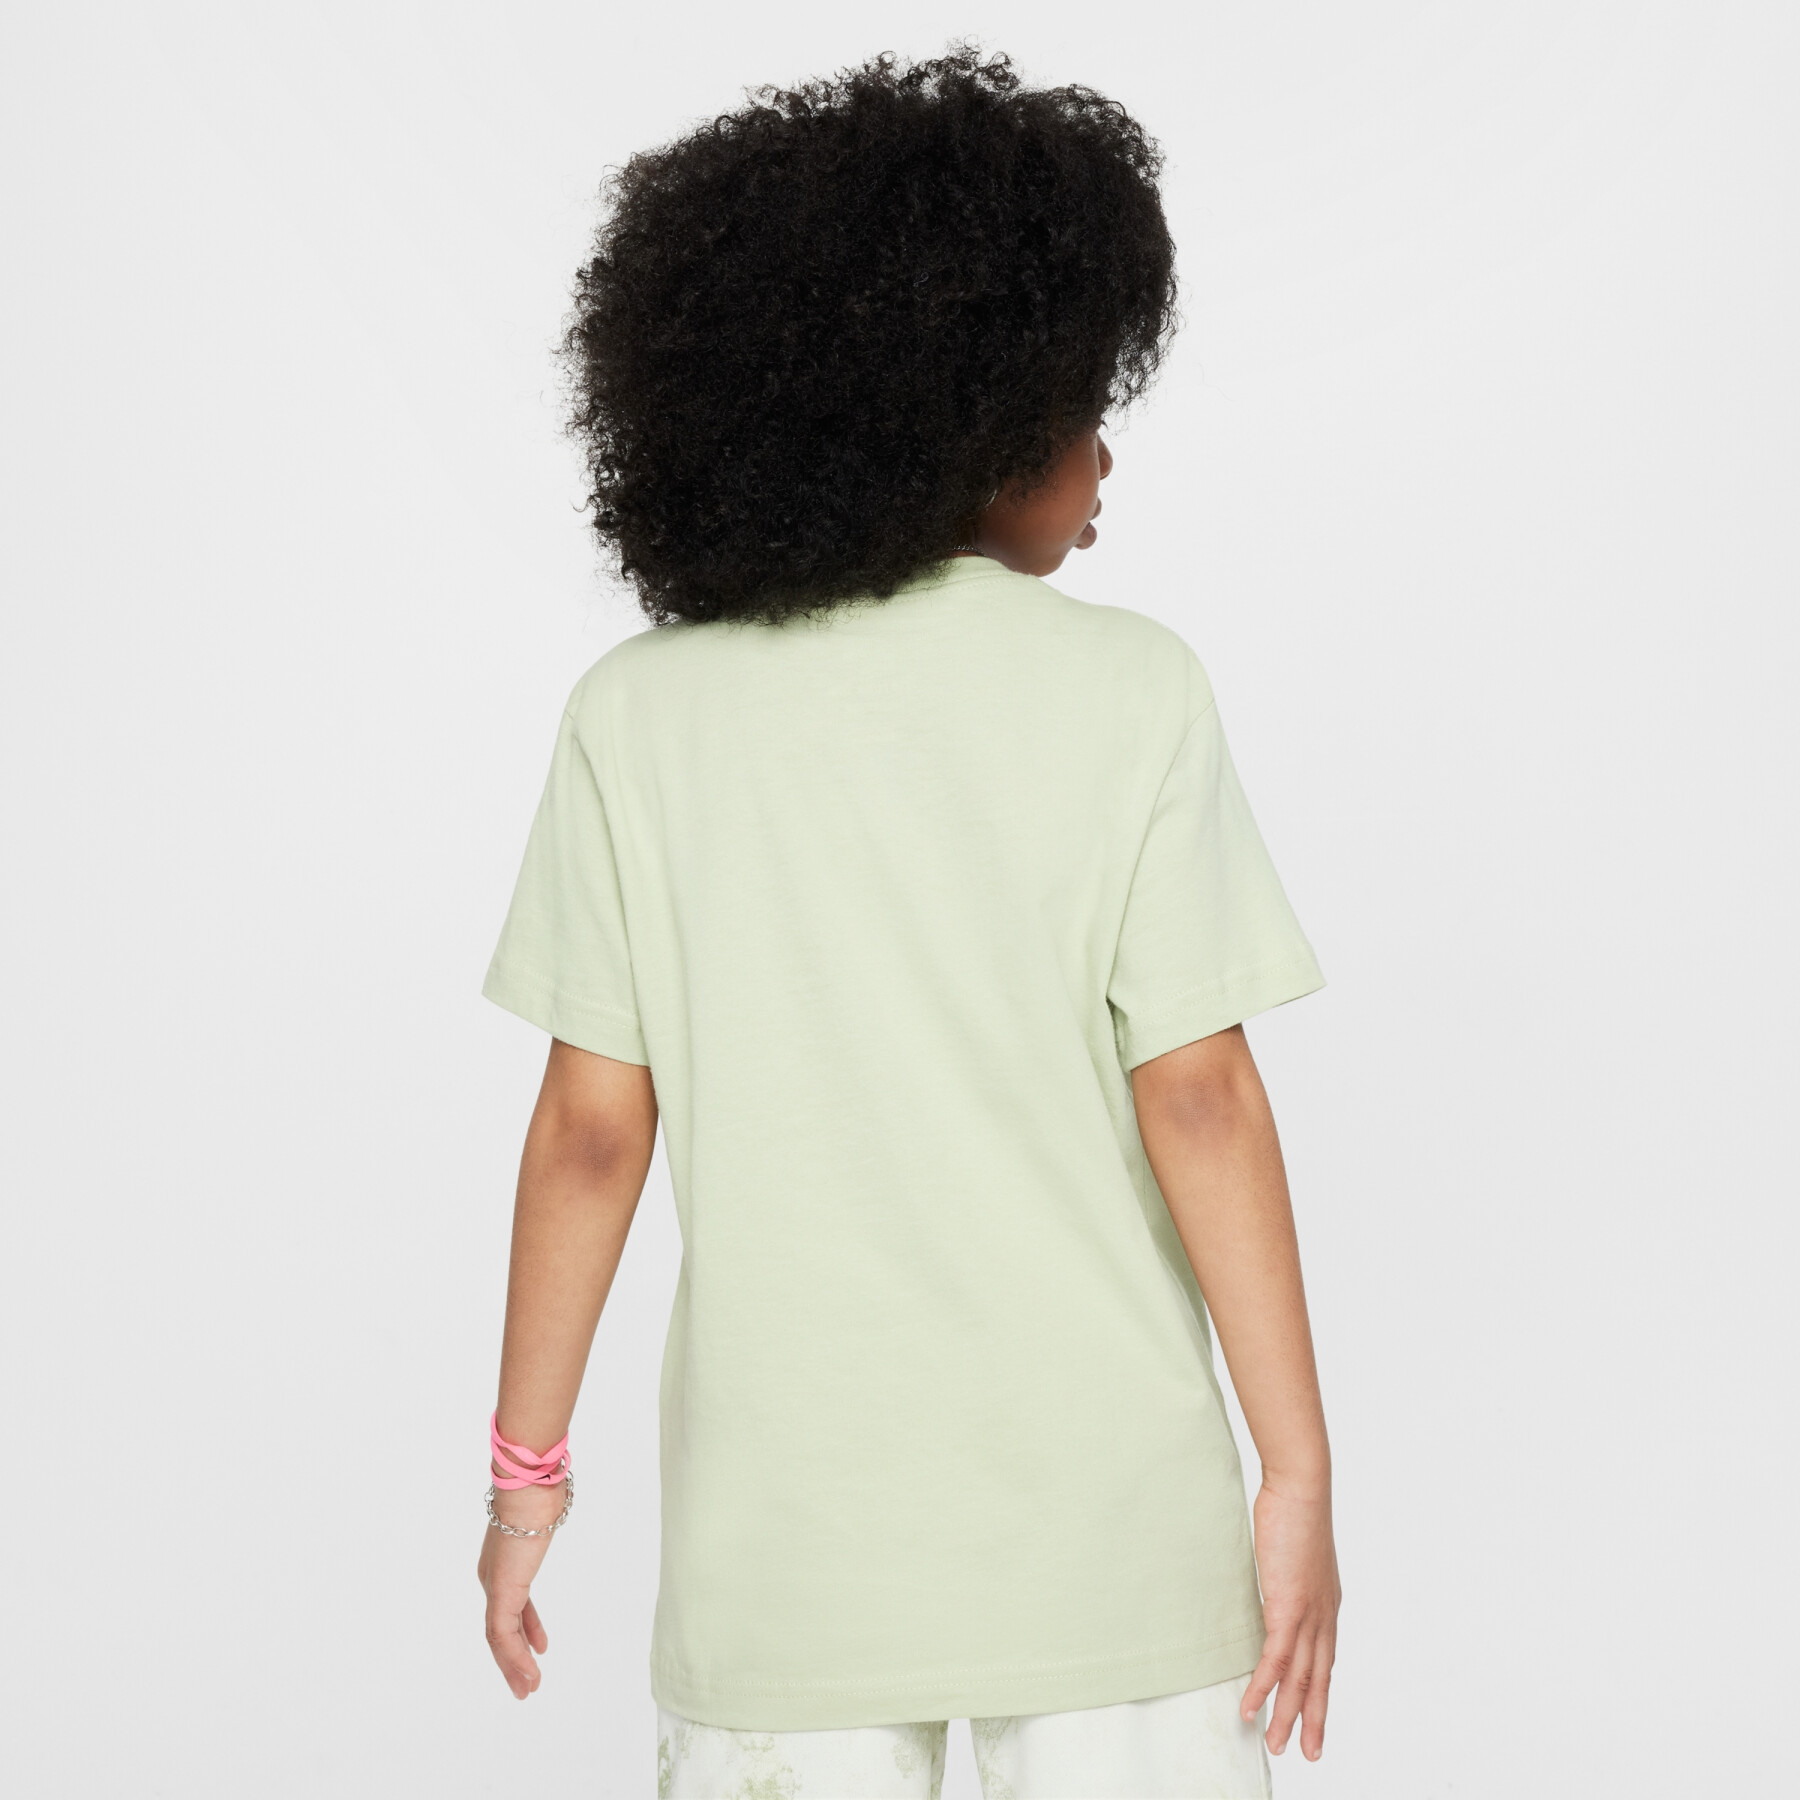 Kinder-T-shirt Nike